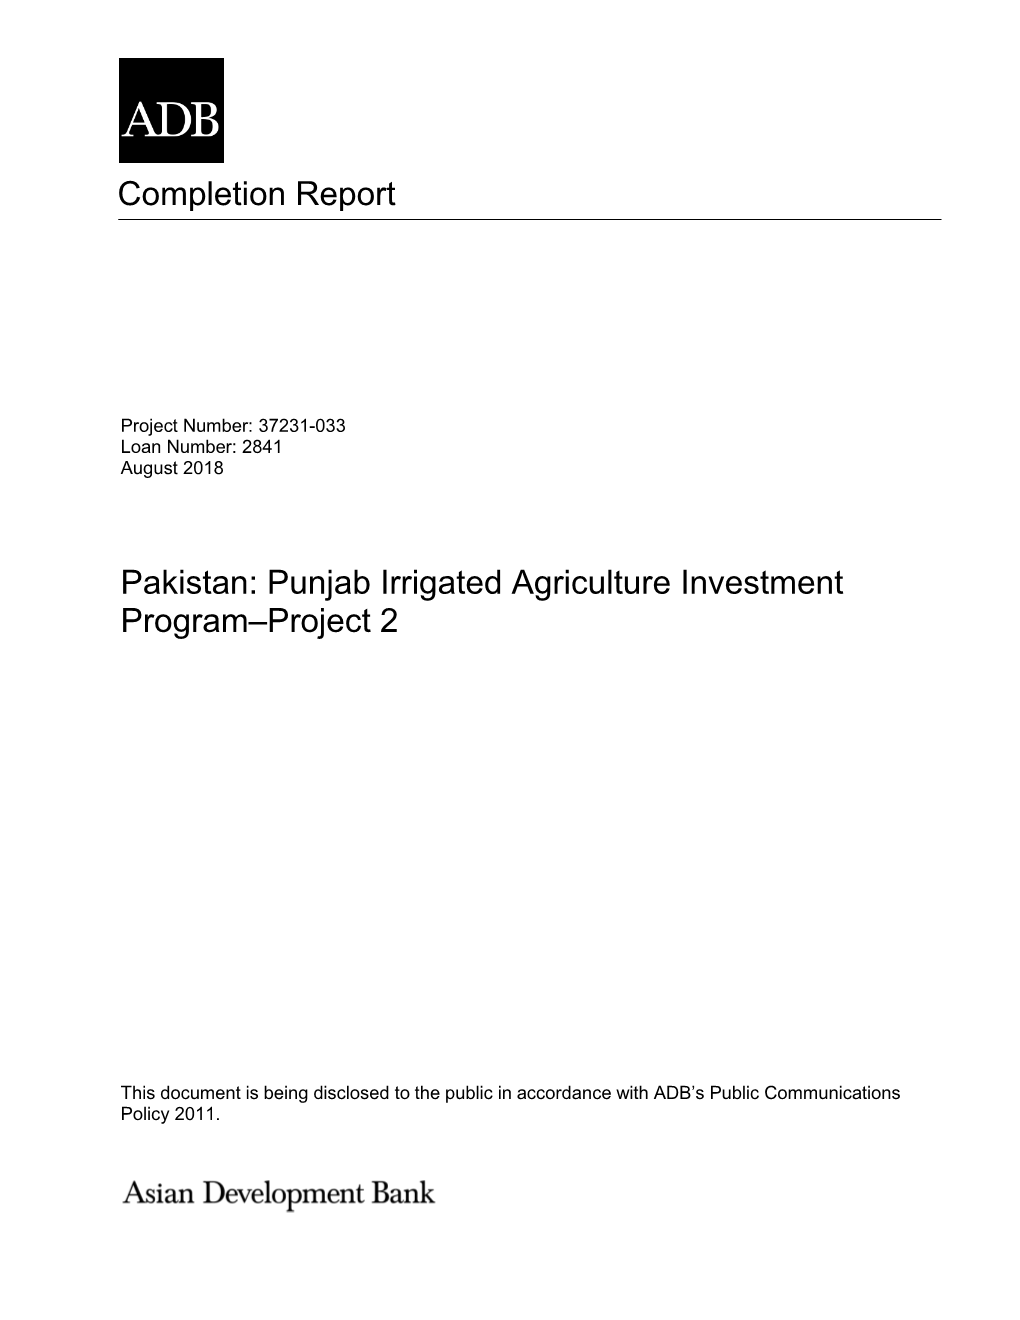 37231-033: Punjab Irrigated Agriculture Investment Program